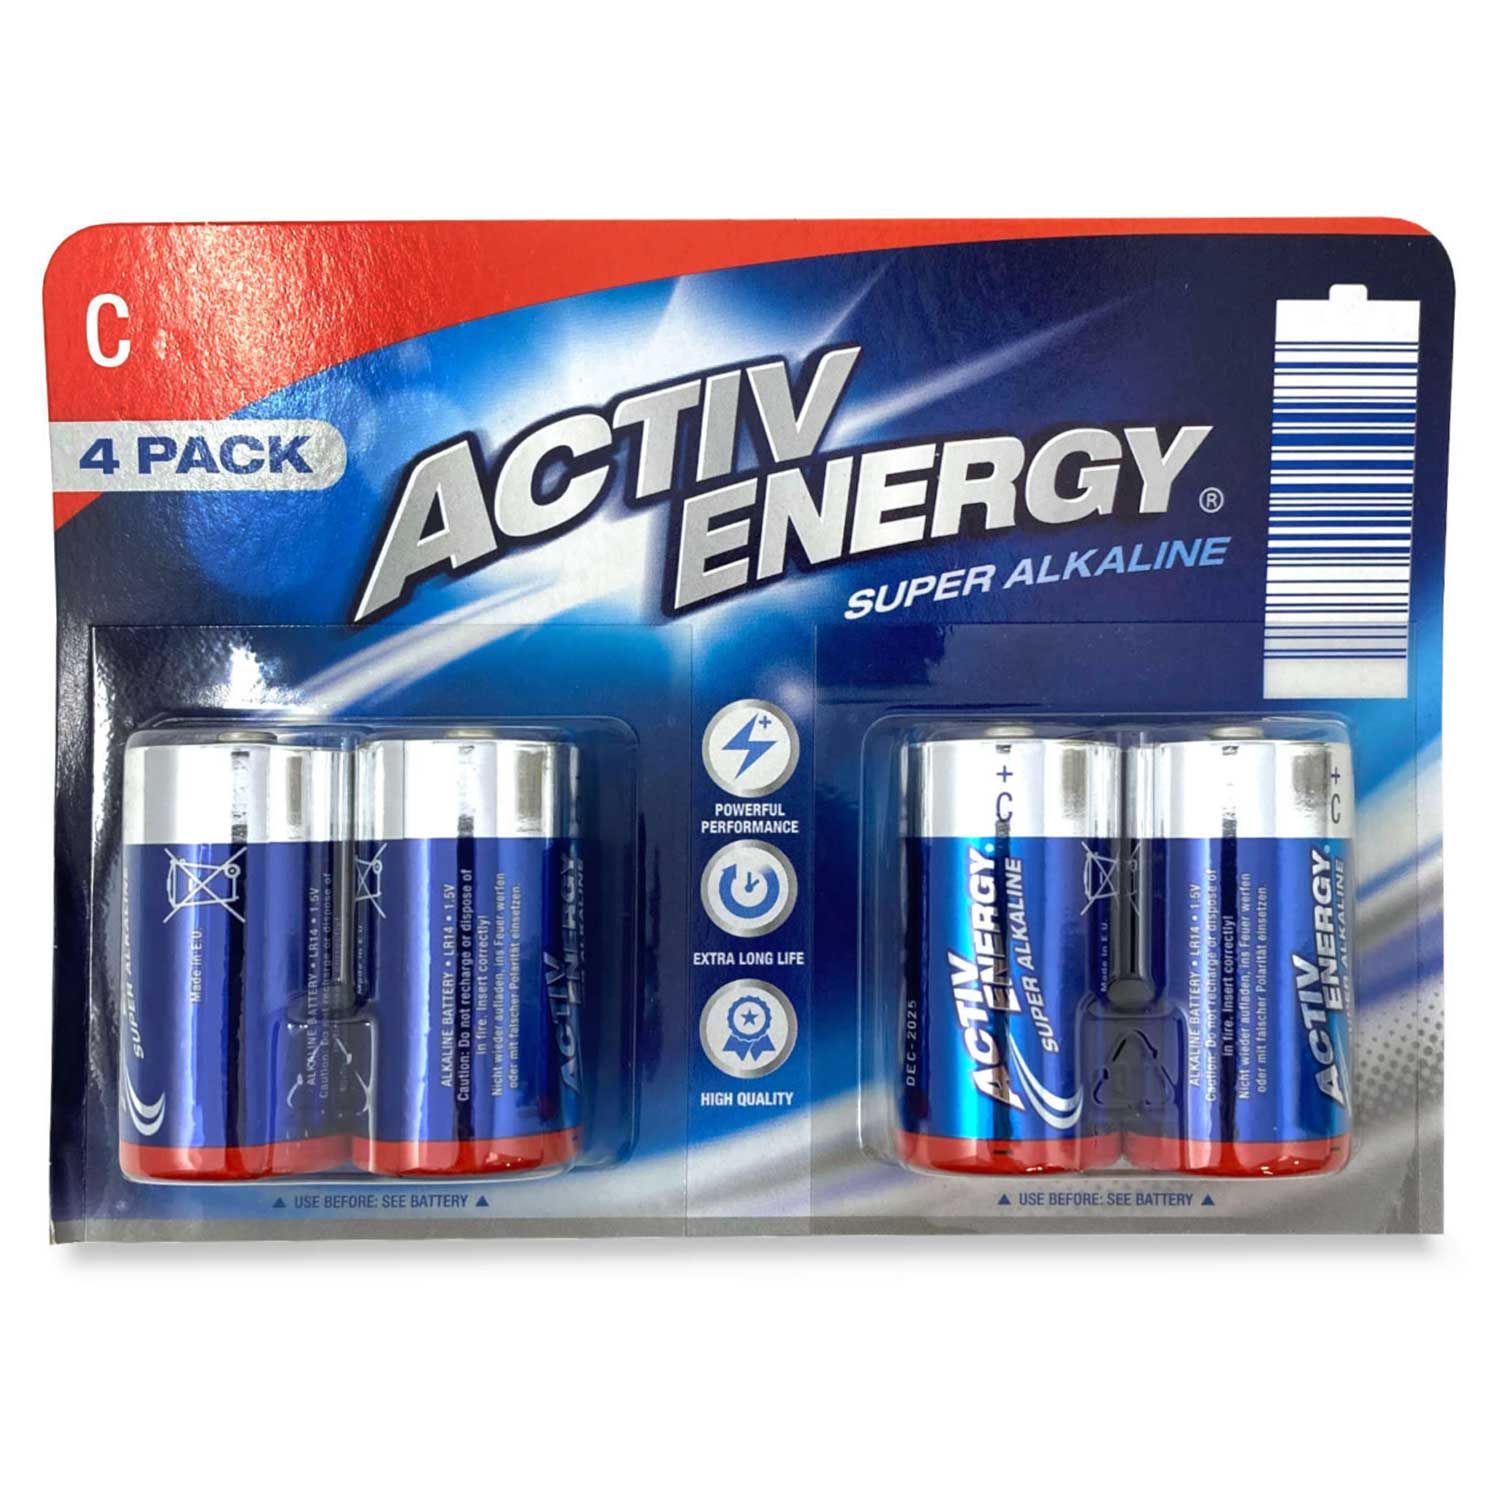 Energy batteries. Supermax more Active Energy аварийный фонарь. Supermax more Active Energy фонарь. Active energetic.